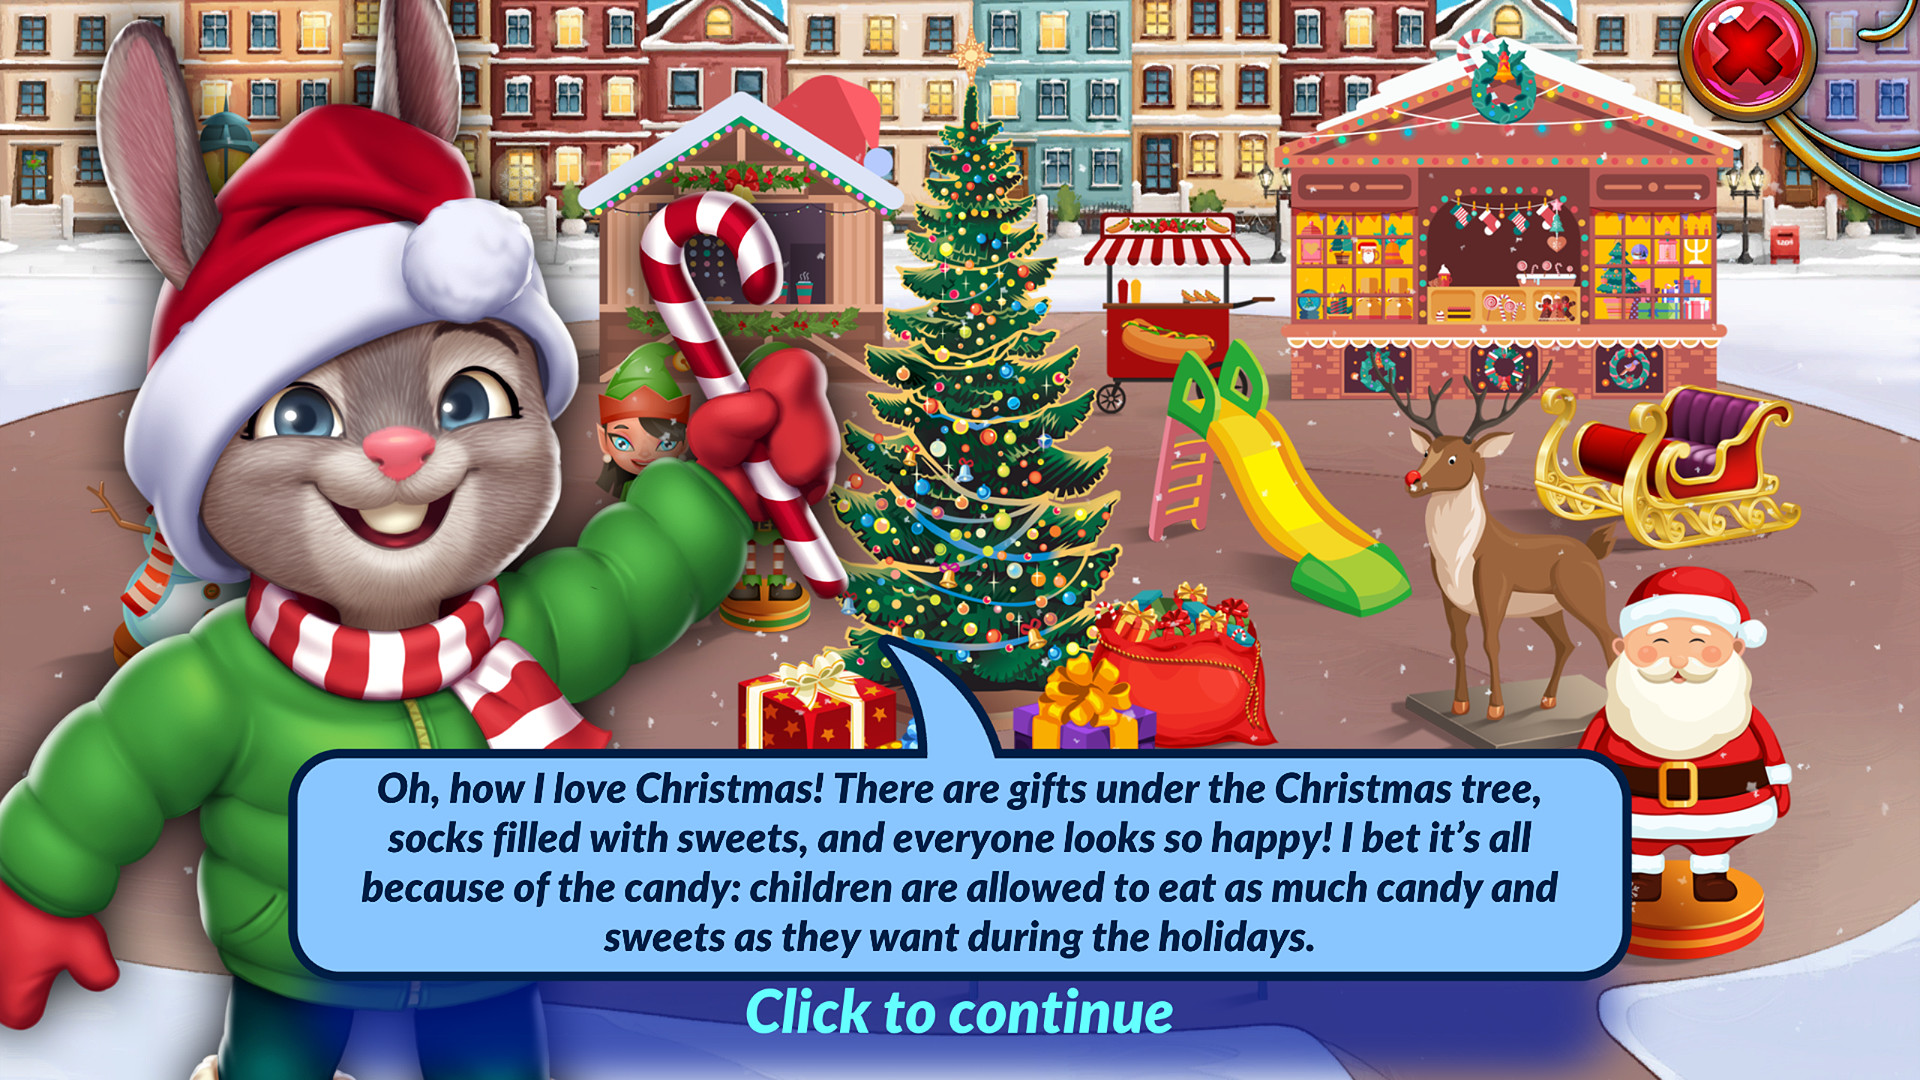 Shopping Clutter 2: Christmas Square screenshot